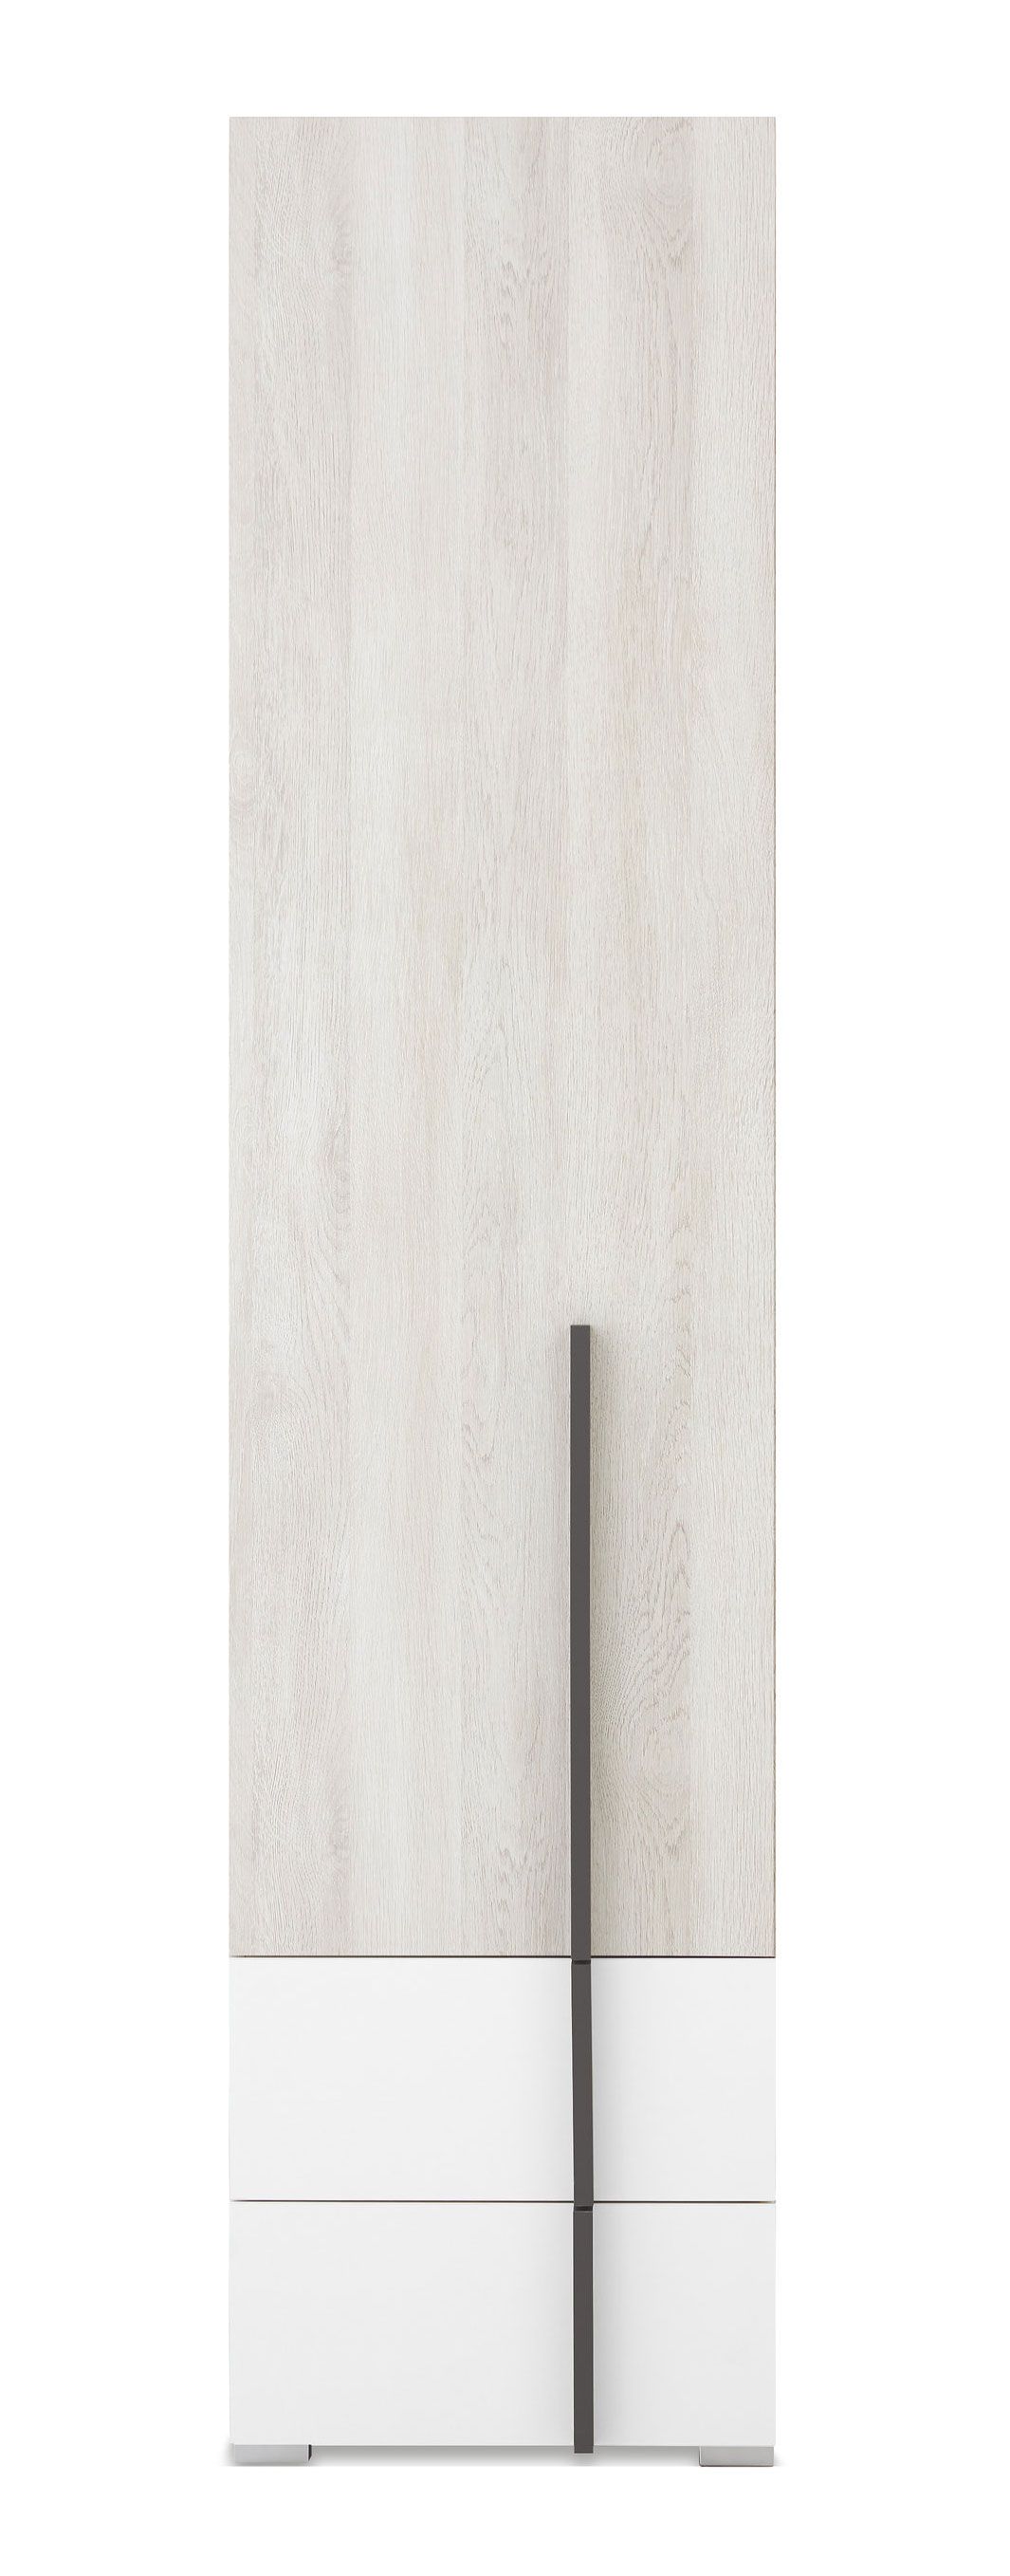 Armoire Schilde 04, Couleur : Chêne blanc / Blanc / Anthracite - Dimensions : 195 x 45 x 43 cm (H x L x P)